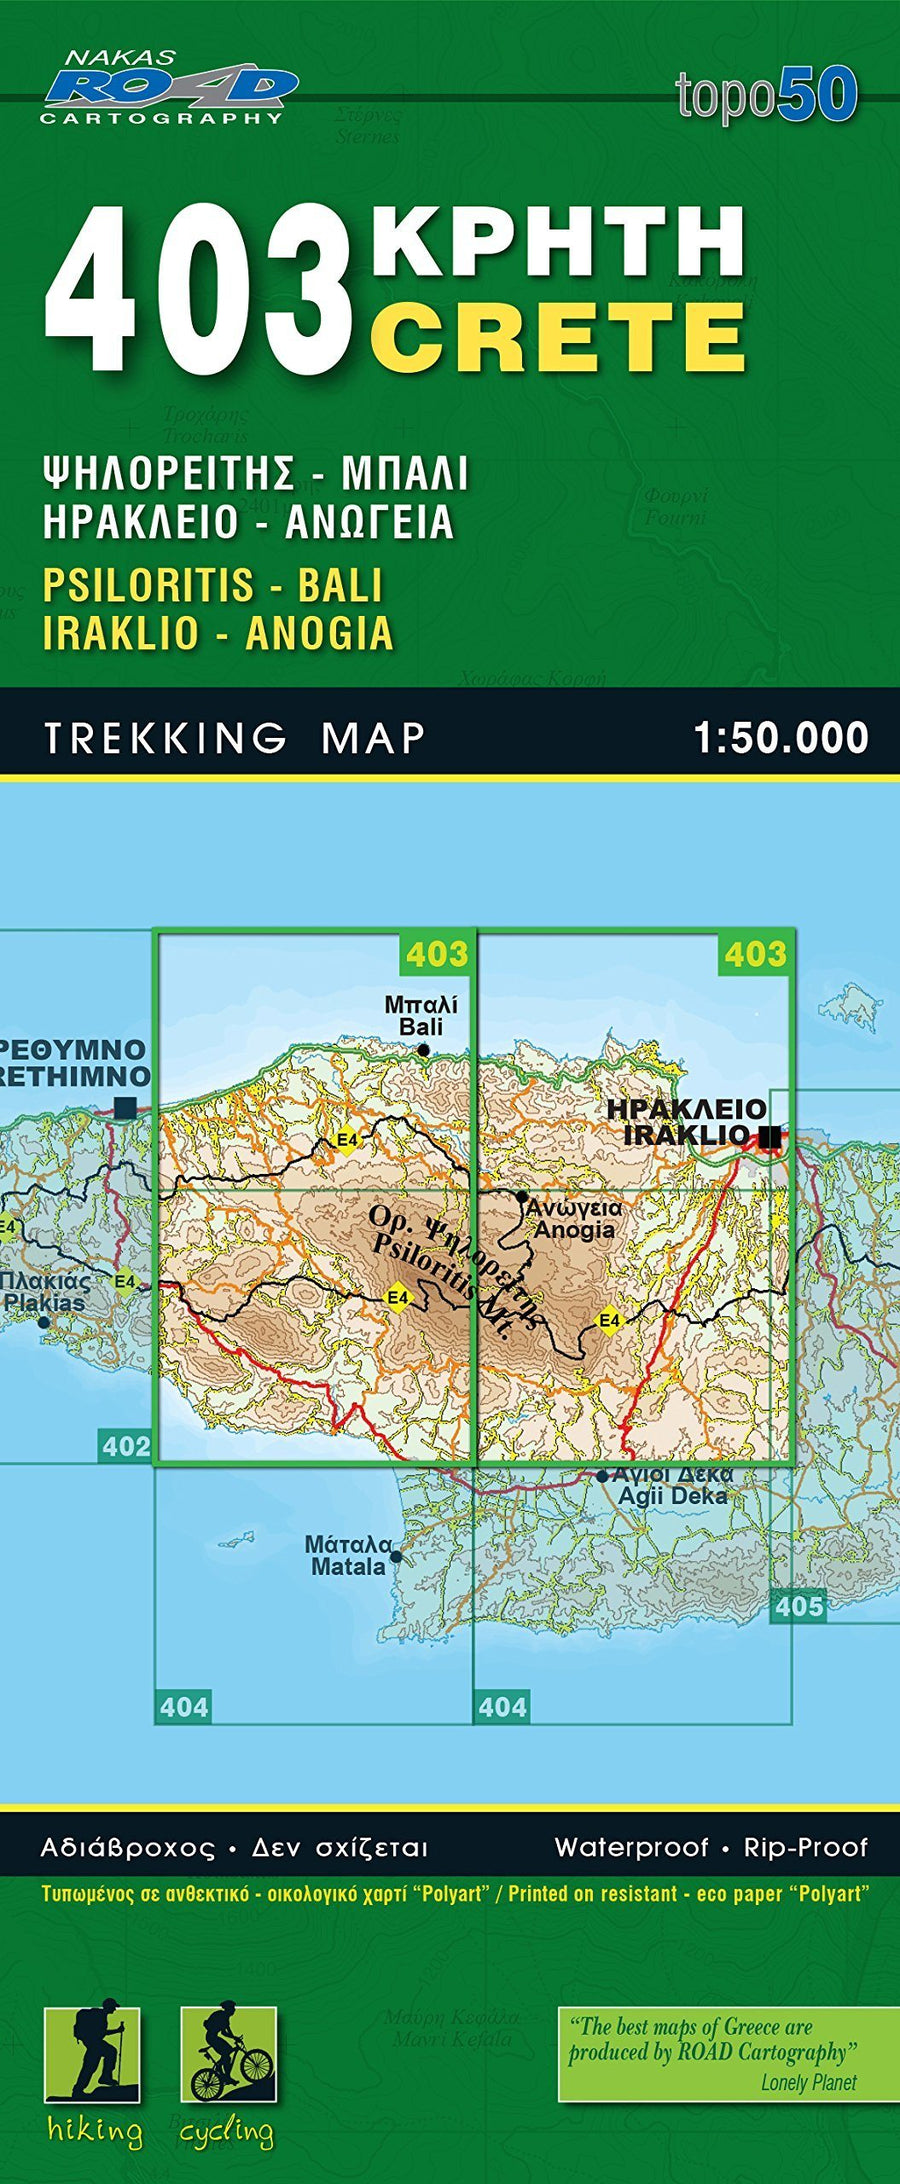 Carte de randonnée n° 403 - Crète : Psiloritis, Heraklion | Road Editions carte pliée Road Editions 